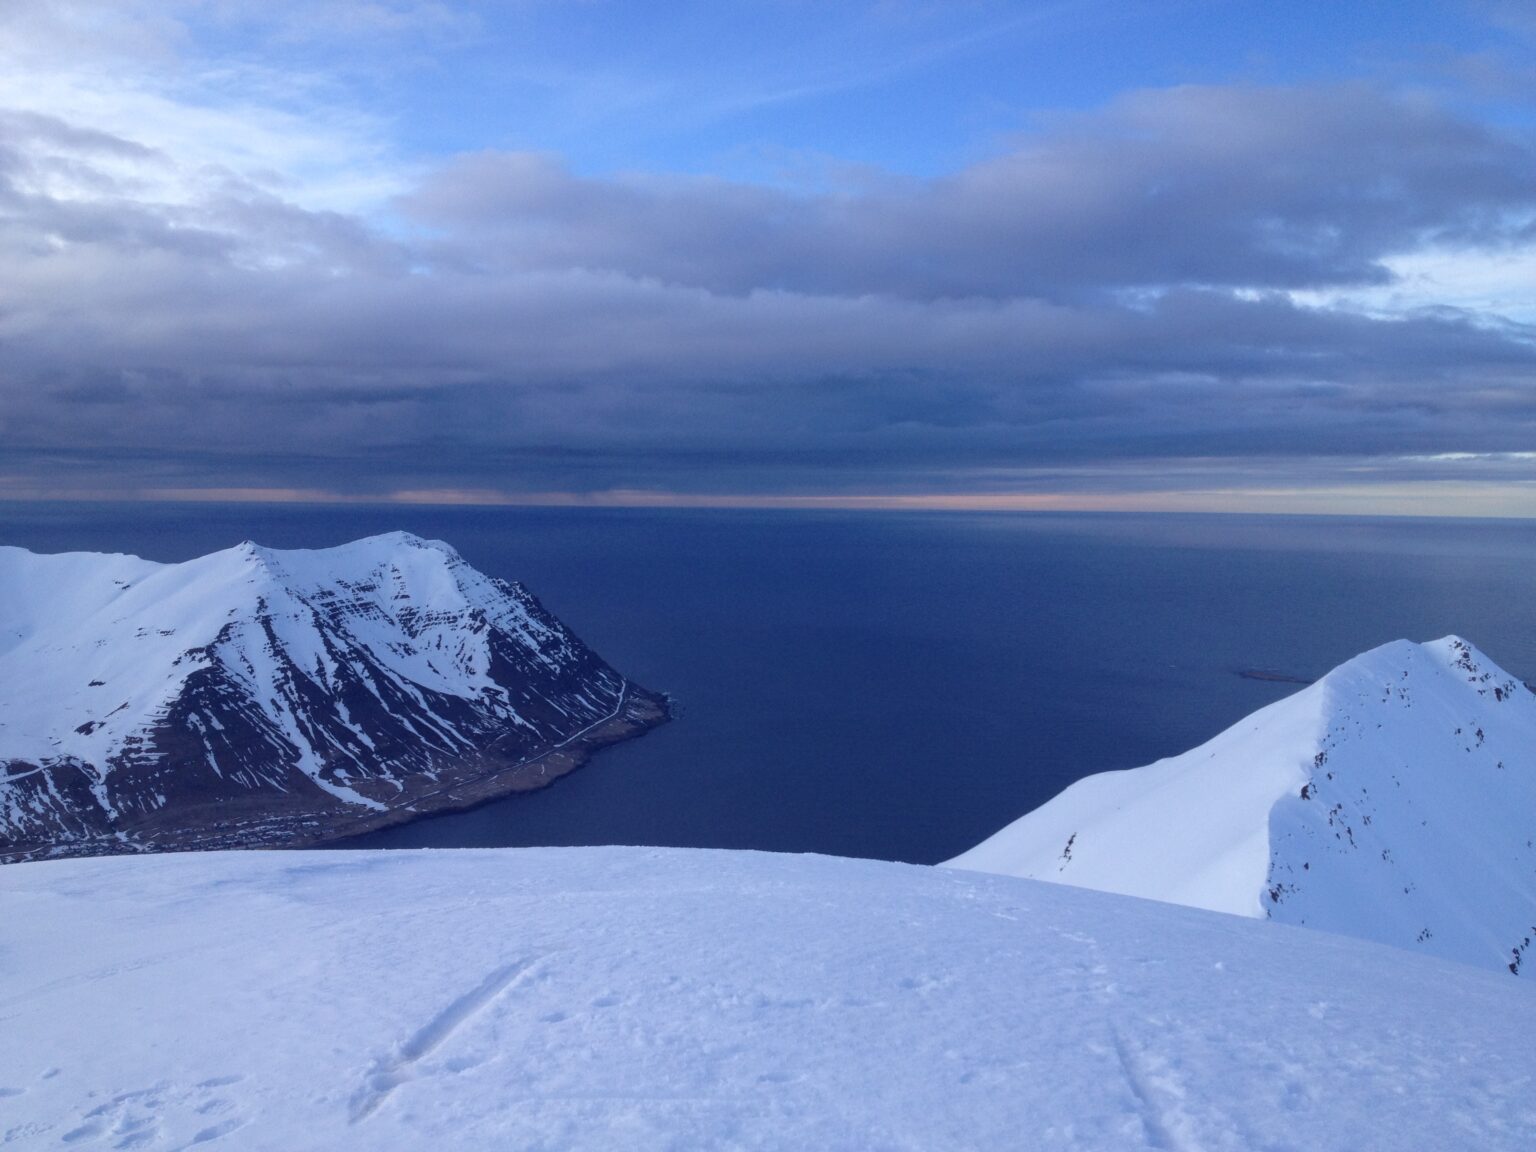 Looking north from the summit of Hestskarðshnjúkur